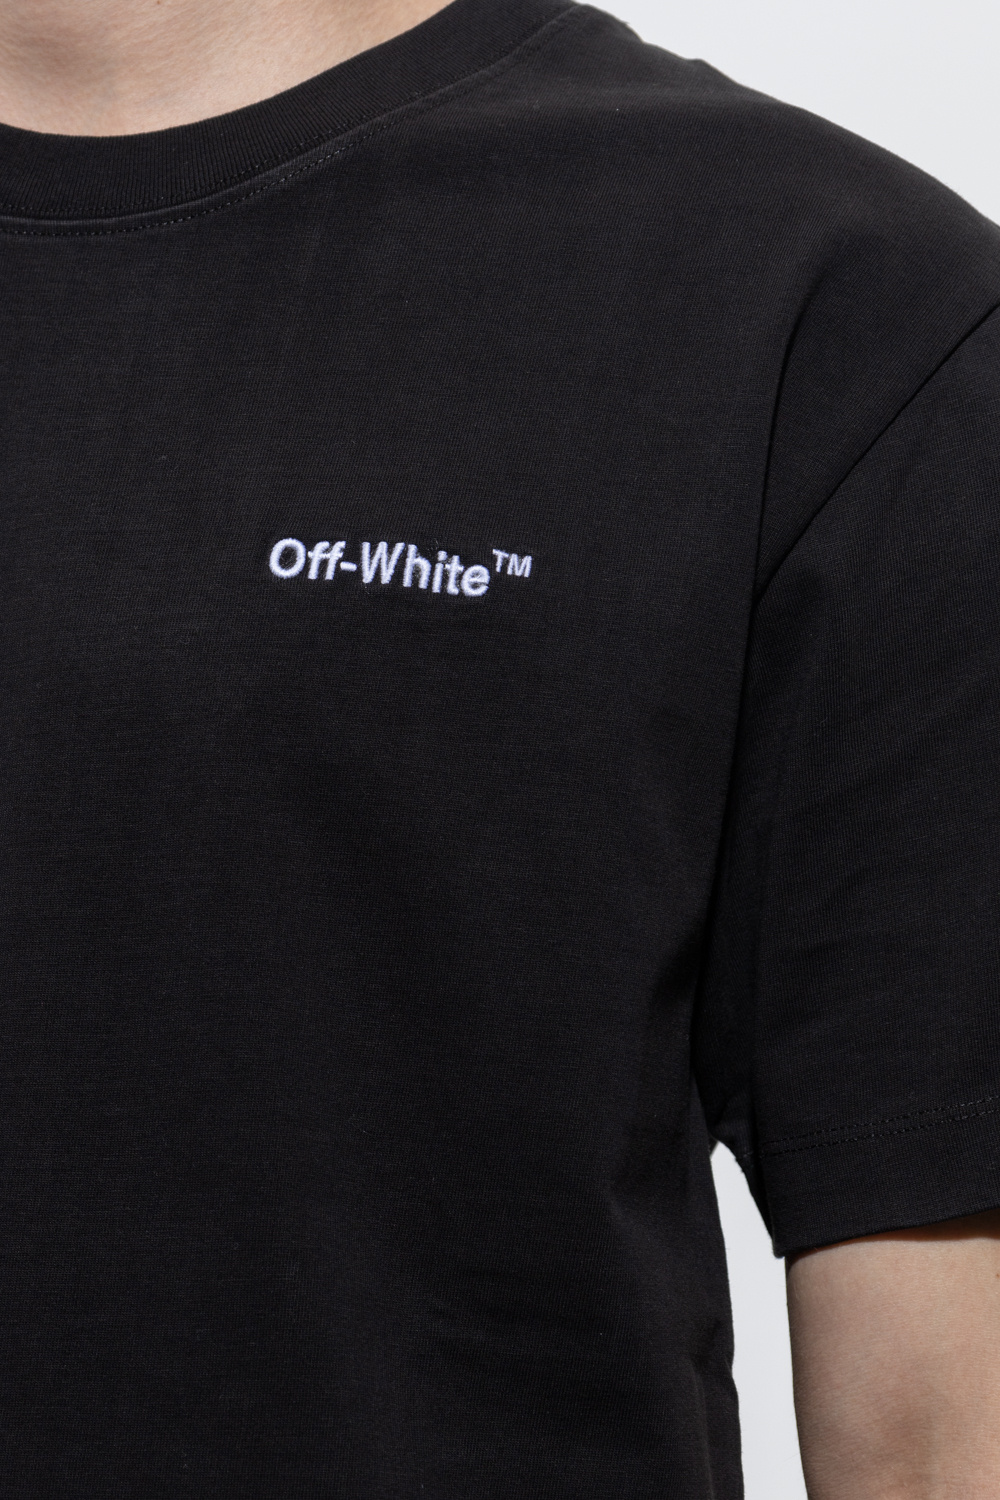 Off-White stone island junior logo print cotton t shirt item